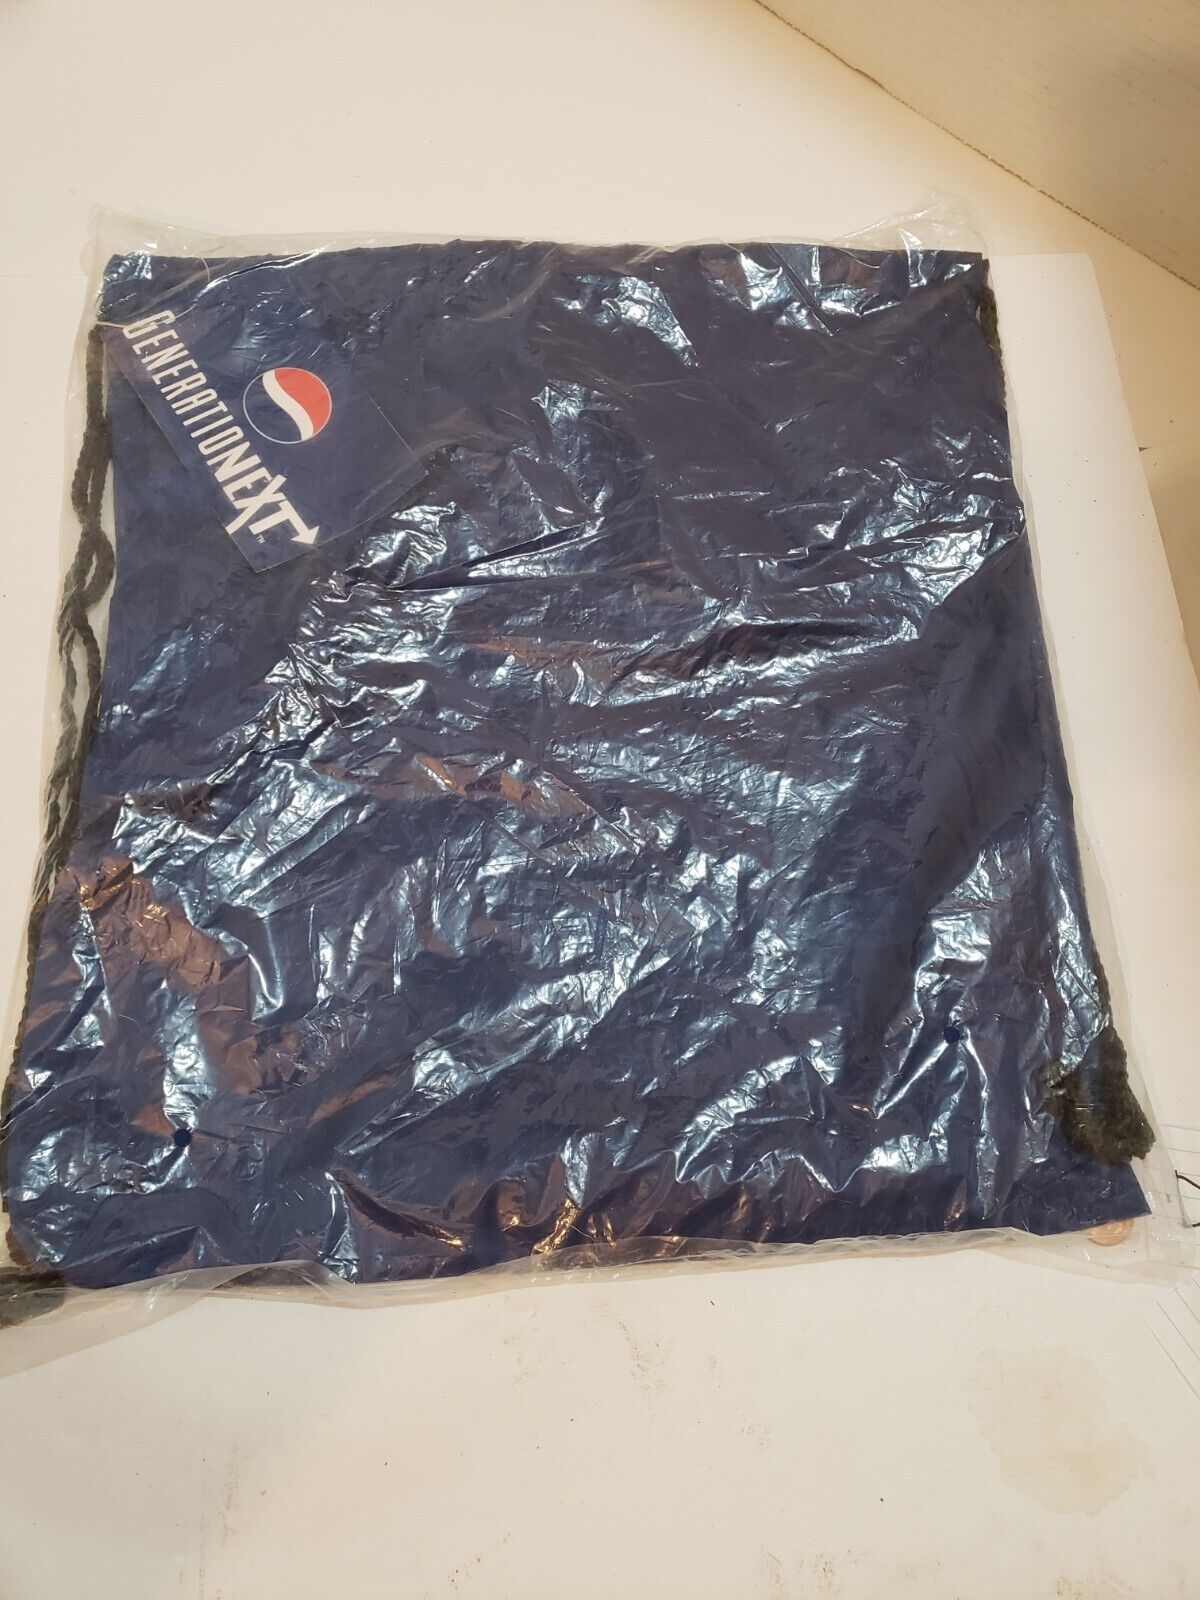 Pepsi-Cola Generation Next Nylon Drawstring Blue Bag (New In Bag)